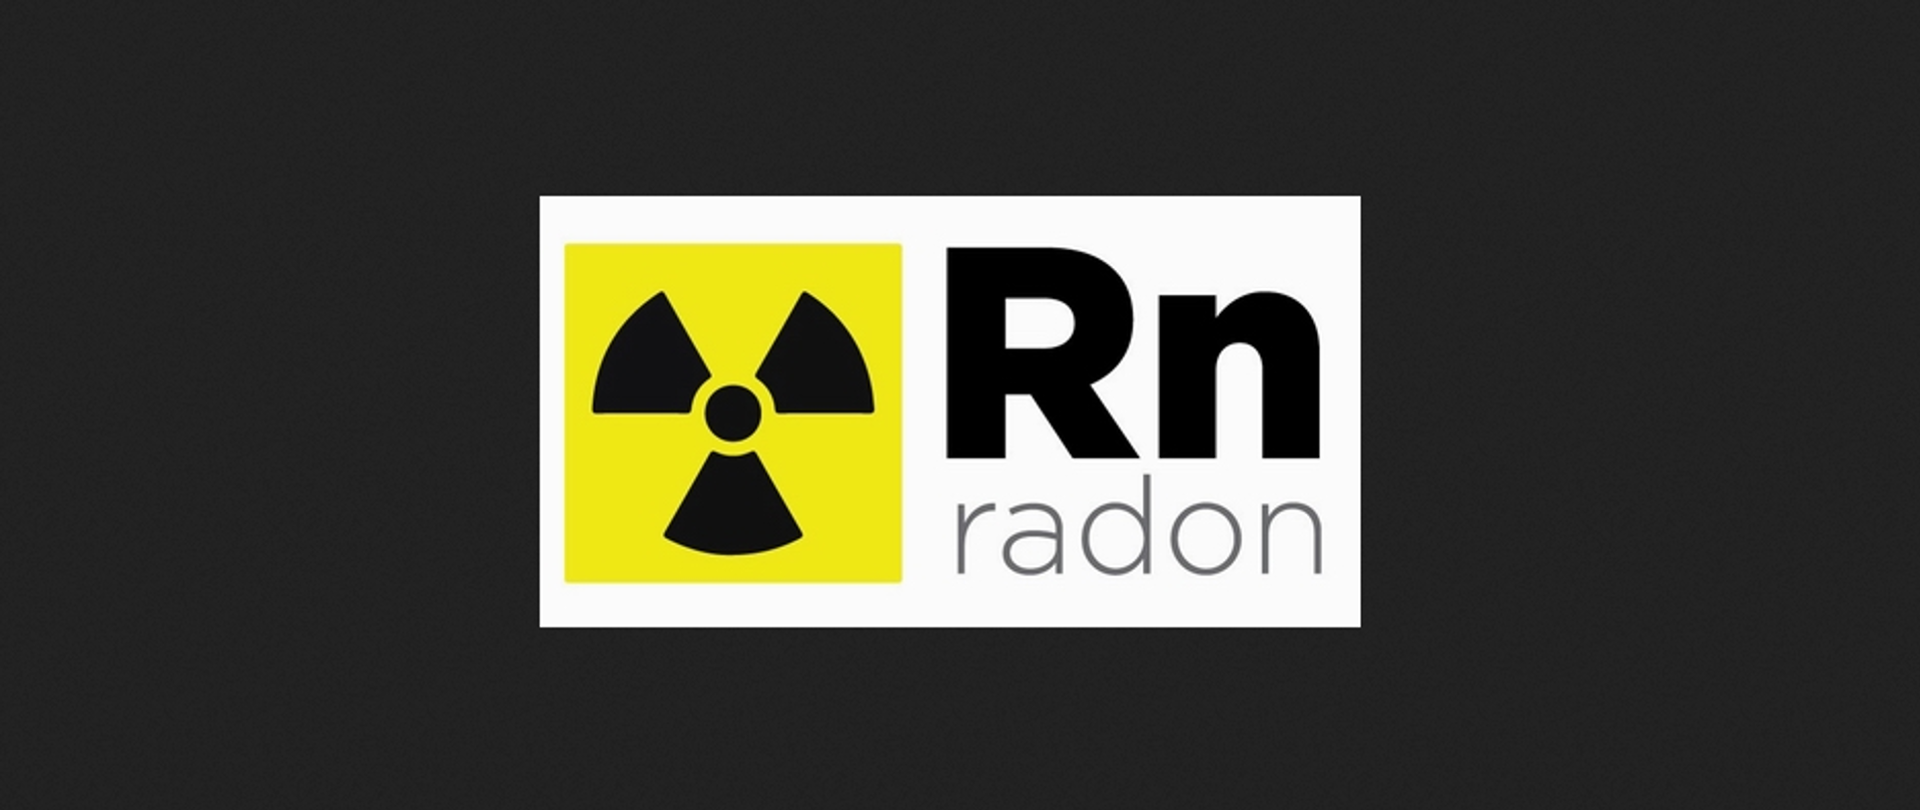 Grafika przedstawia napis Radon 